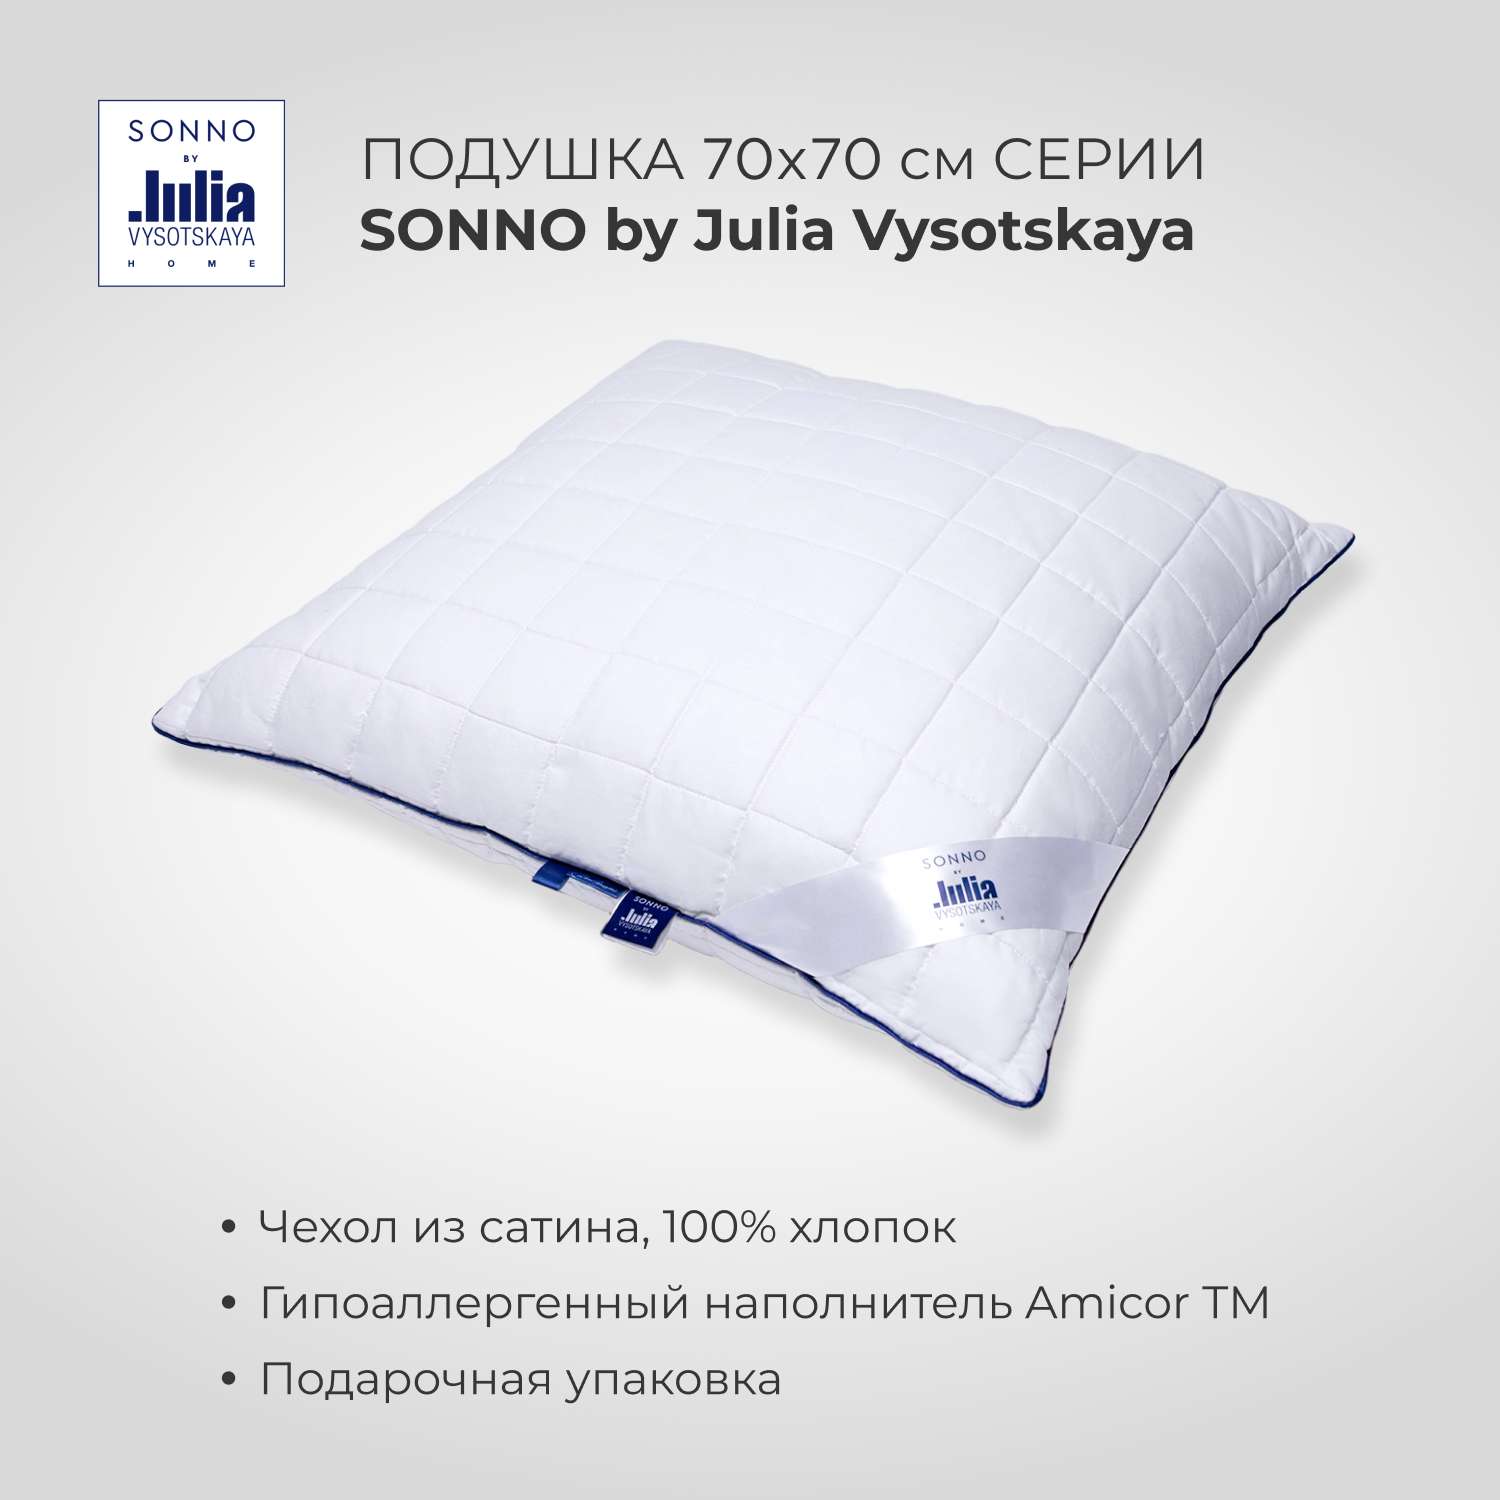 Подушка для сна SONNO by Julia Vysotskaya 70х70 Amicor TM - фото 1